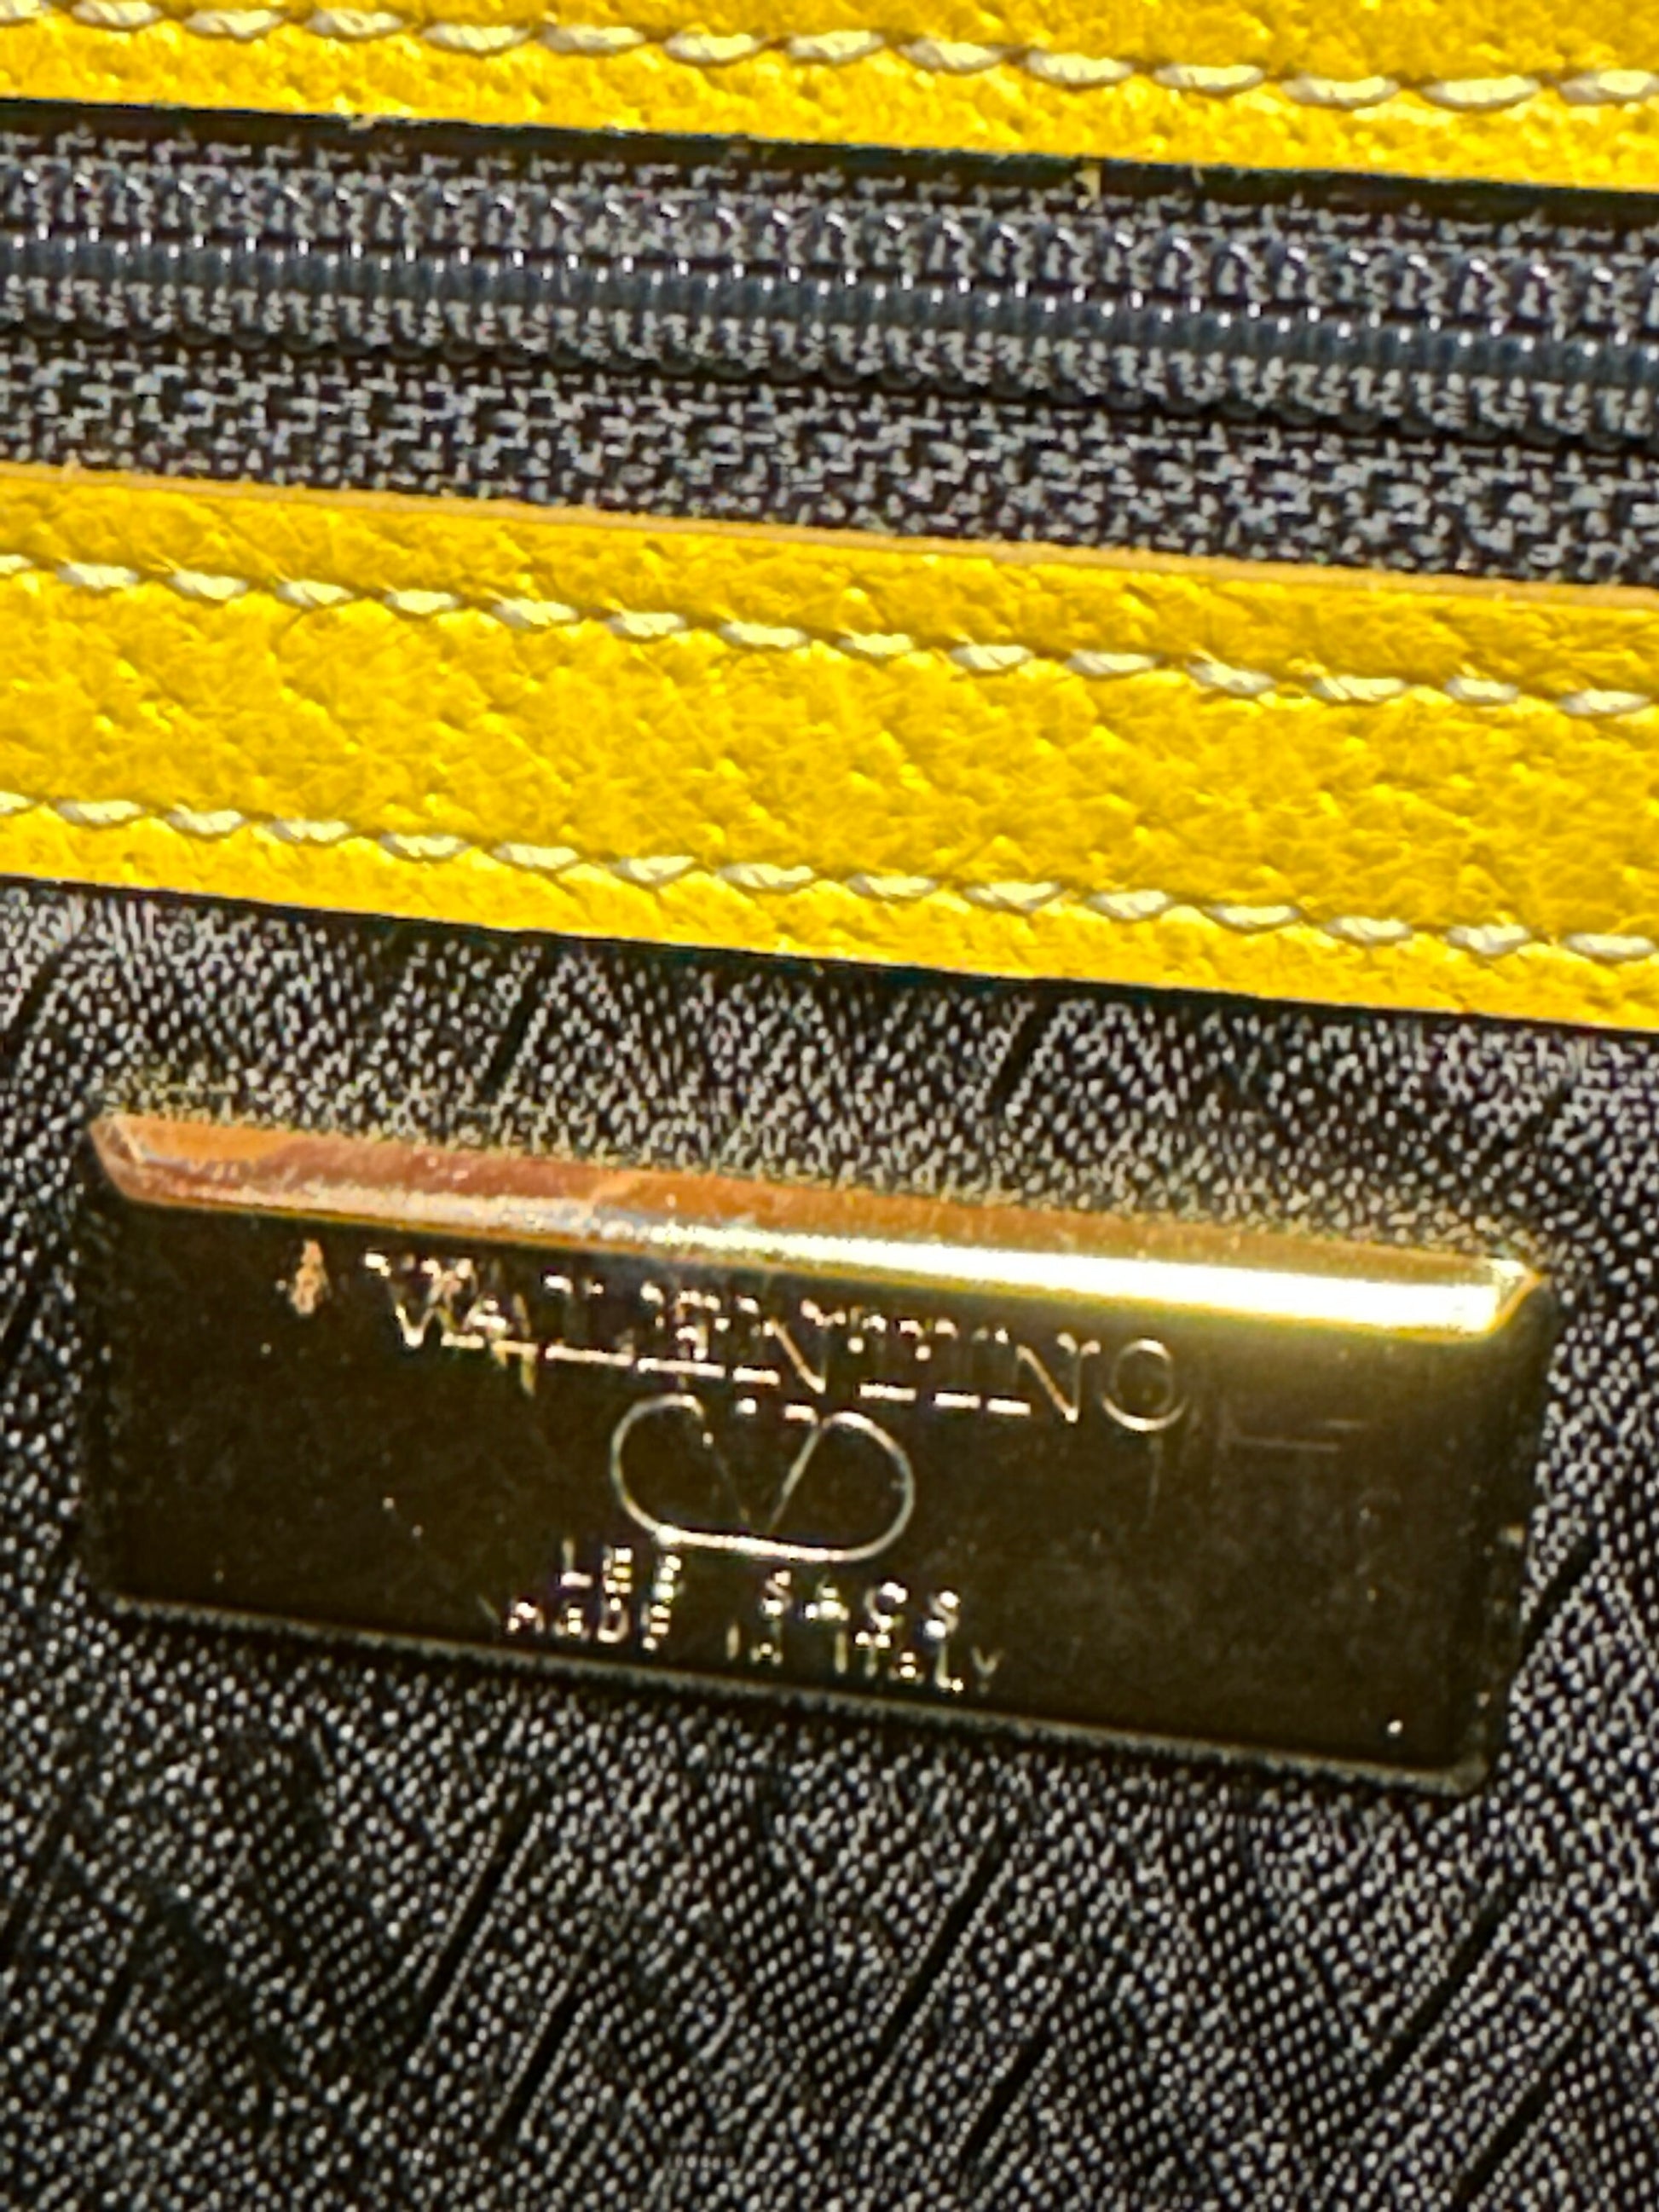 VALENTINO VINTAGE 100% Authentic Genuine Leather Handbag, Yellow, 1990's, Great Condition